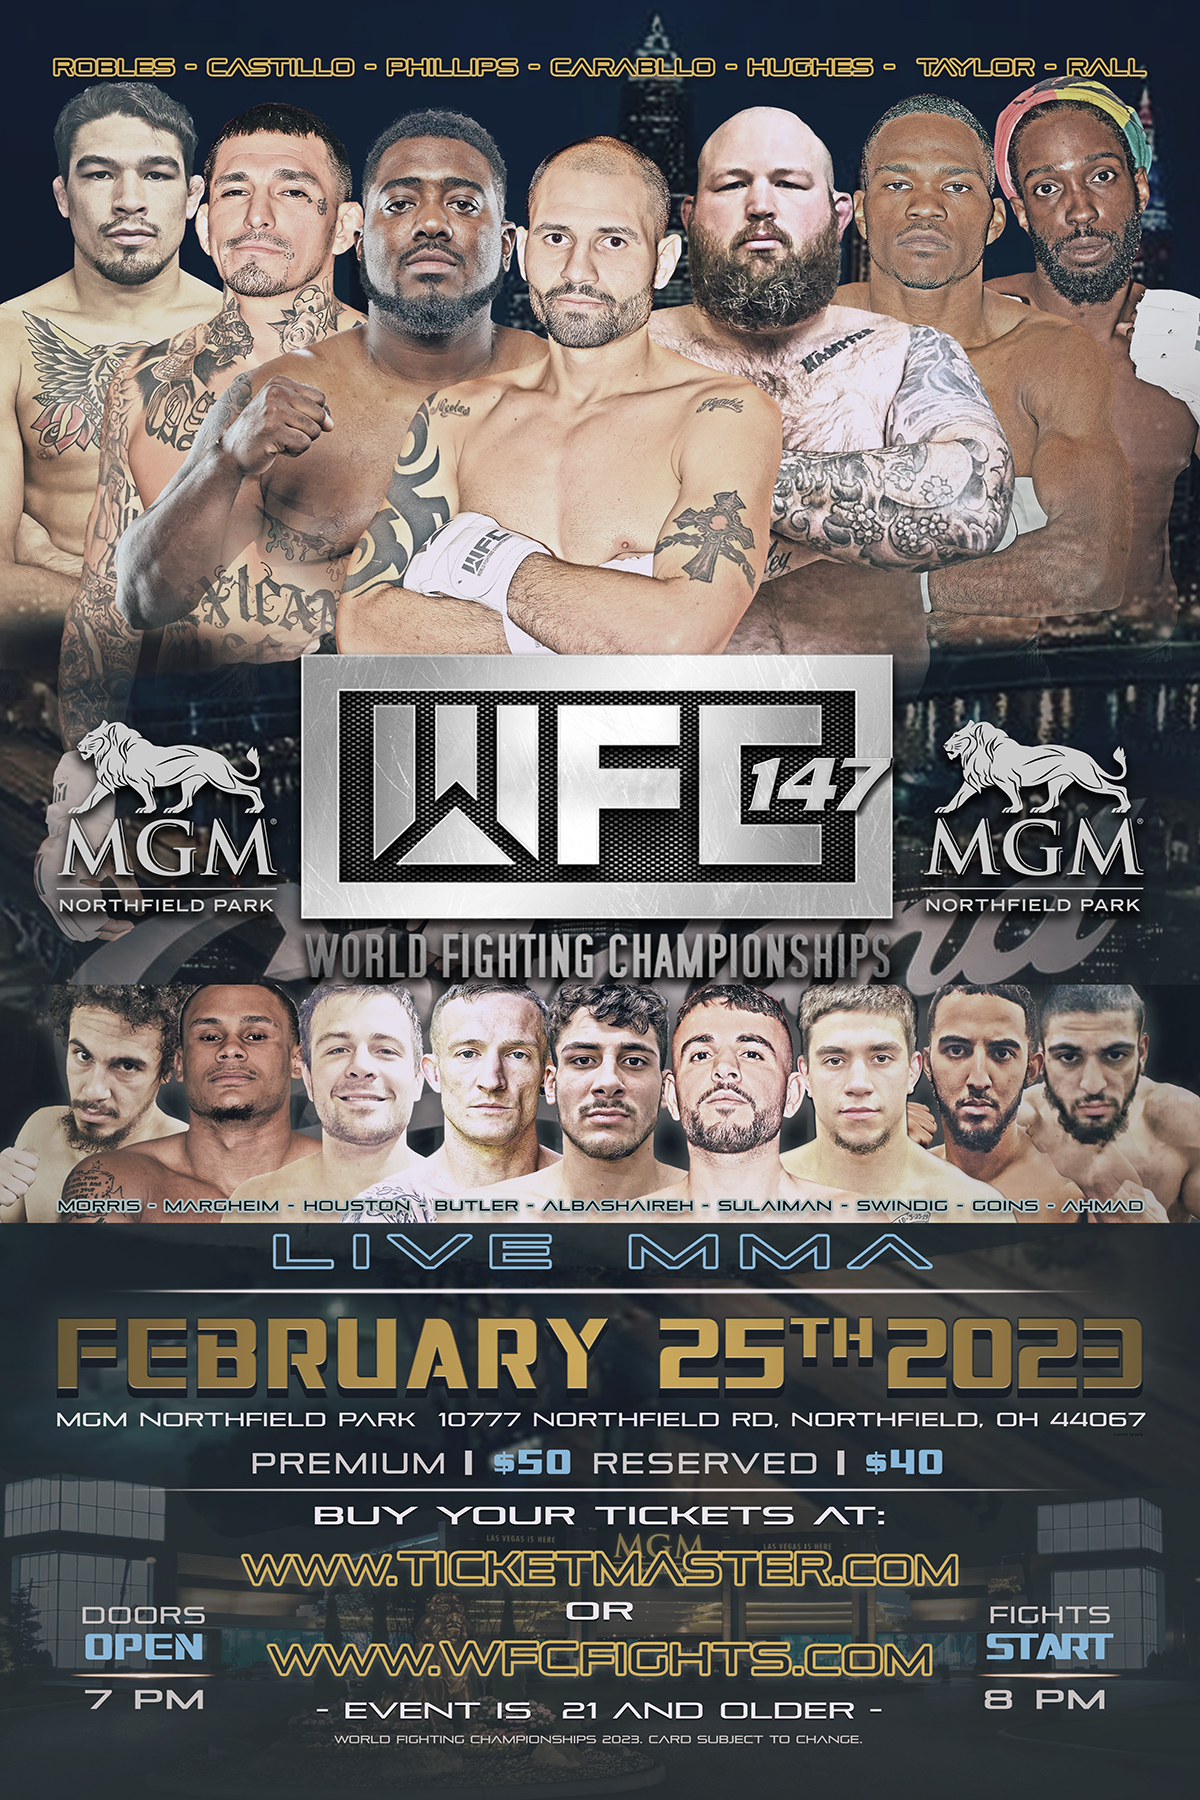 WFC 147 LIVE MMA at MGM Northfield Park February 25th,2023